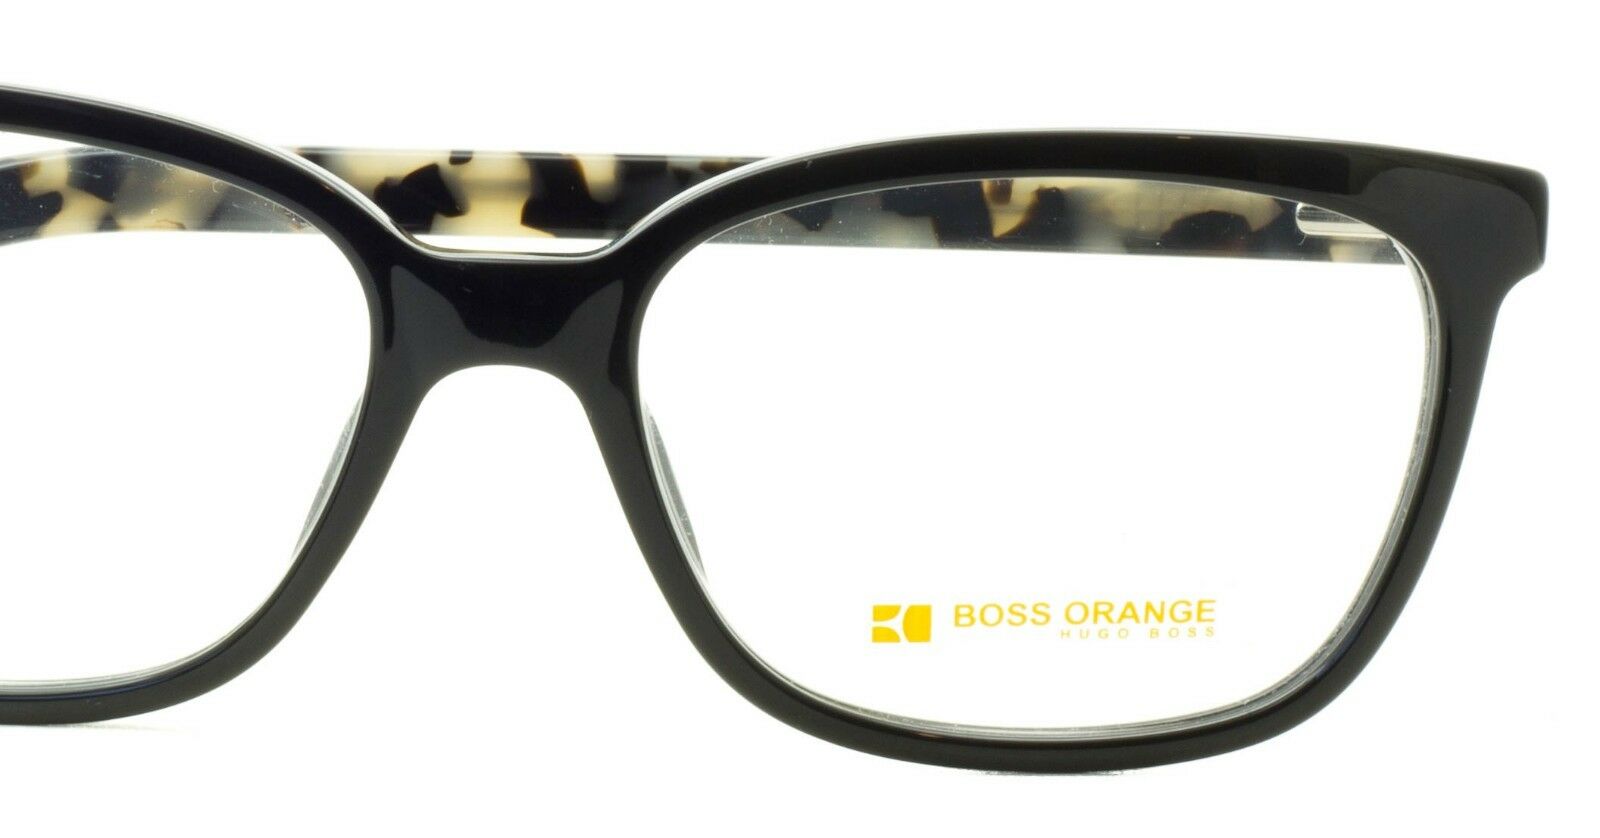 BOSS ORANGE BO 0257 30517288 Eyewear FRAMES RX Optical Glasses Eyeglasses - New